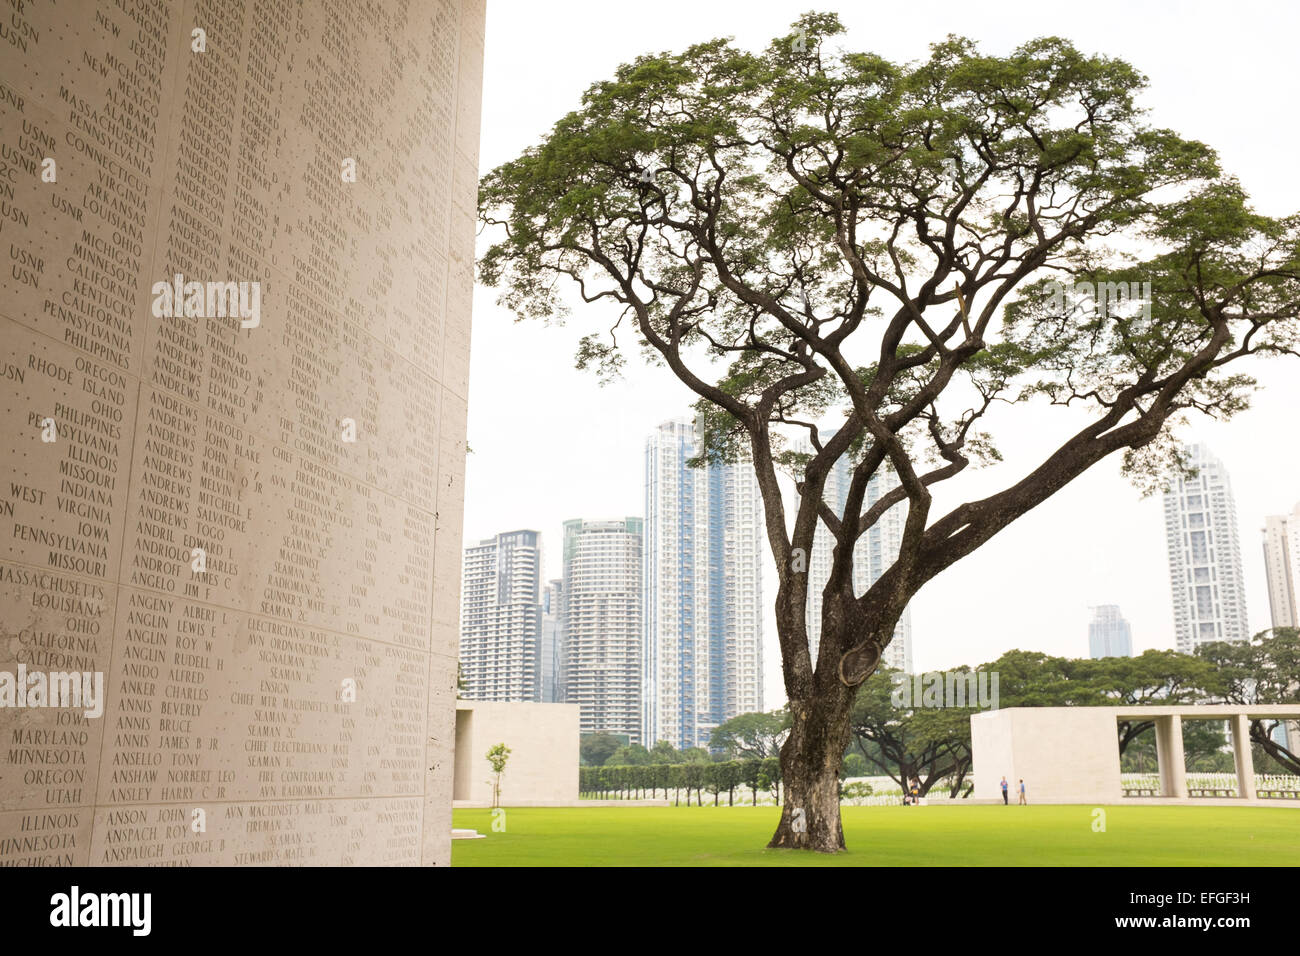 The Manila American Cemetery and Memorial located in Fort Bonifacio, Metro Manila. Stock Photo